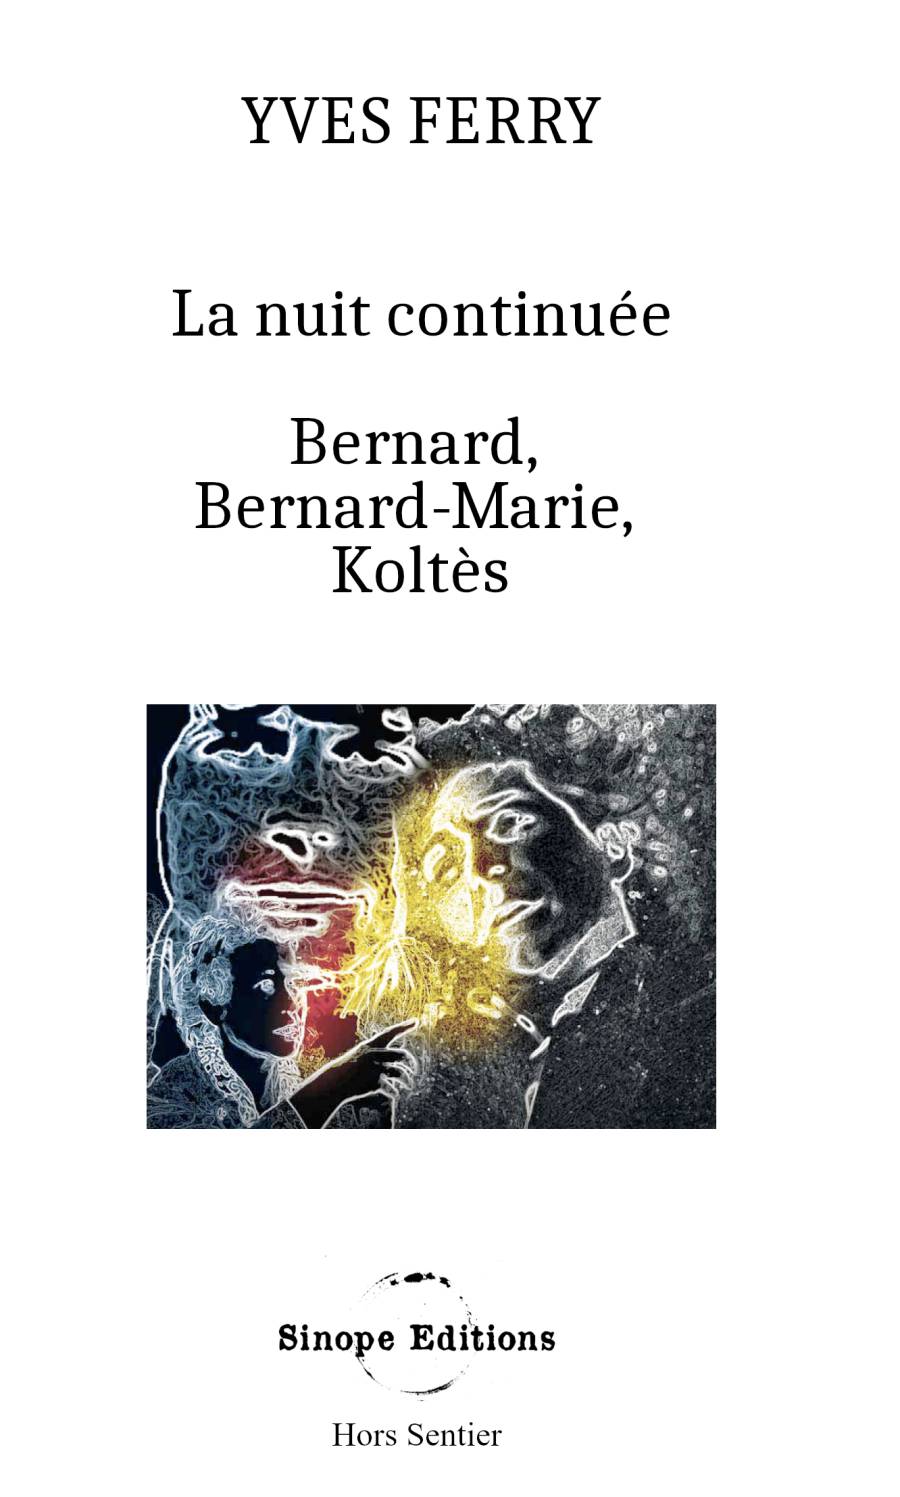 La Nuit continuée, Bernard, Bernard-Marie, Koltès - Yves Ferry